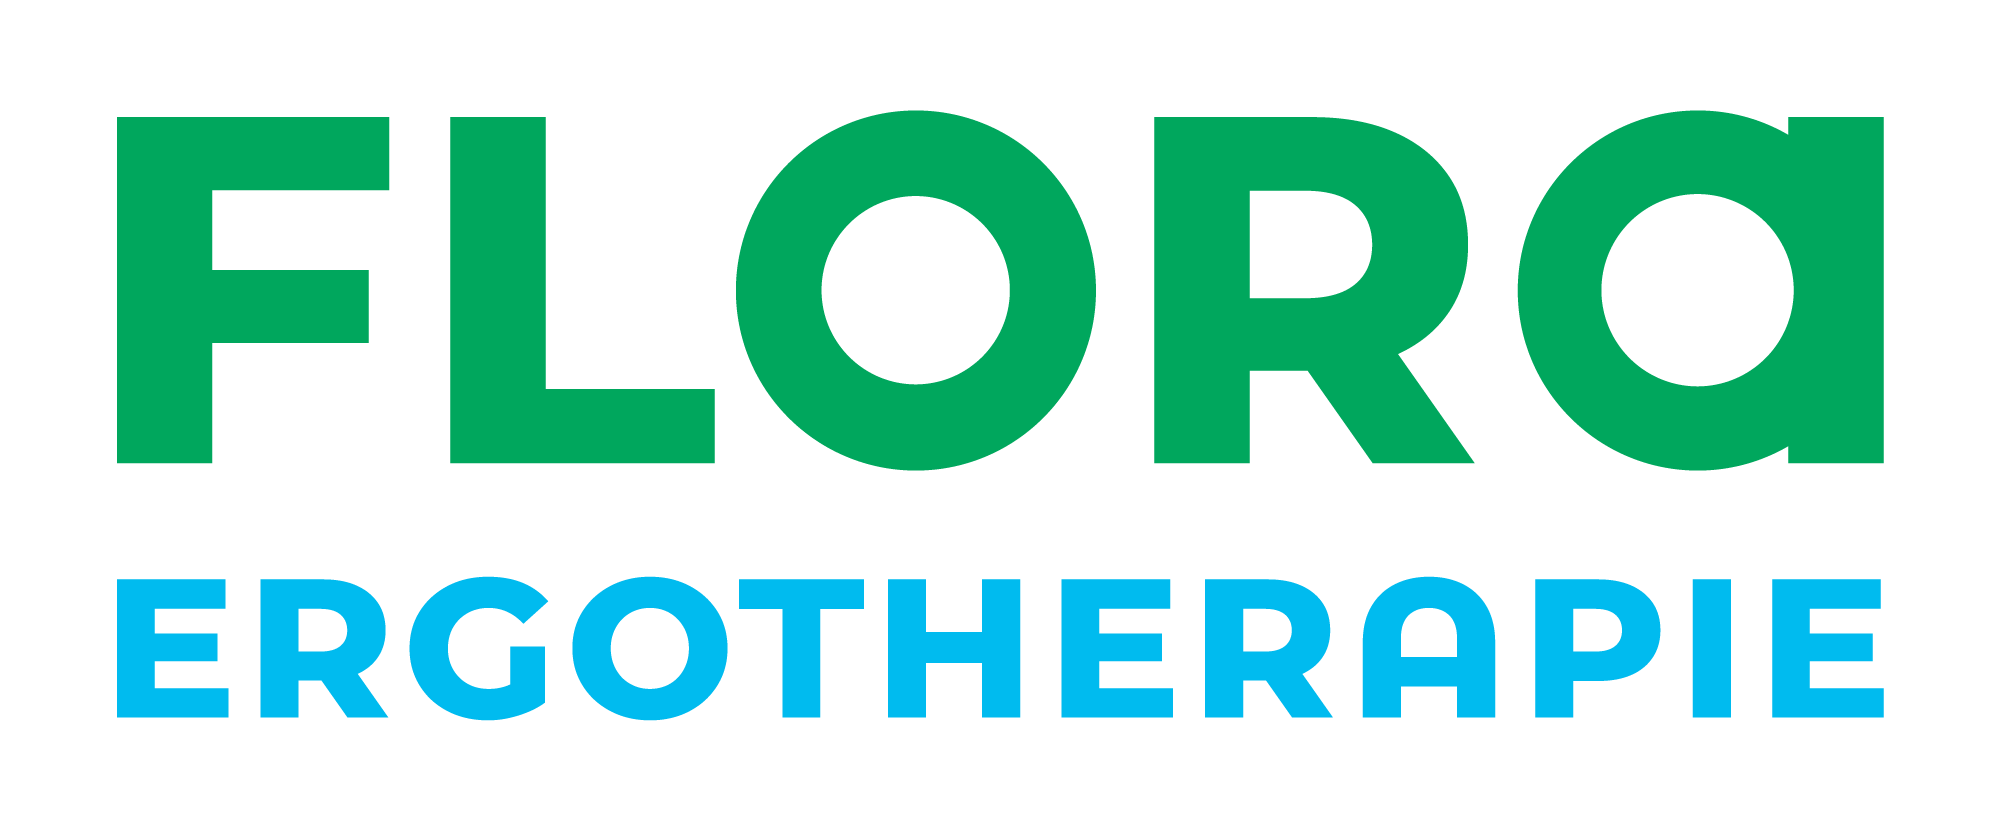 Flora-ergotherapie